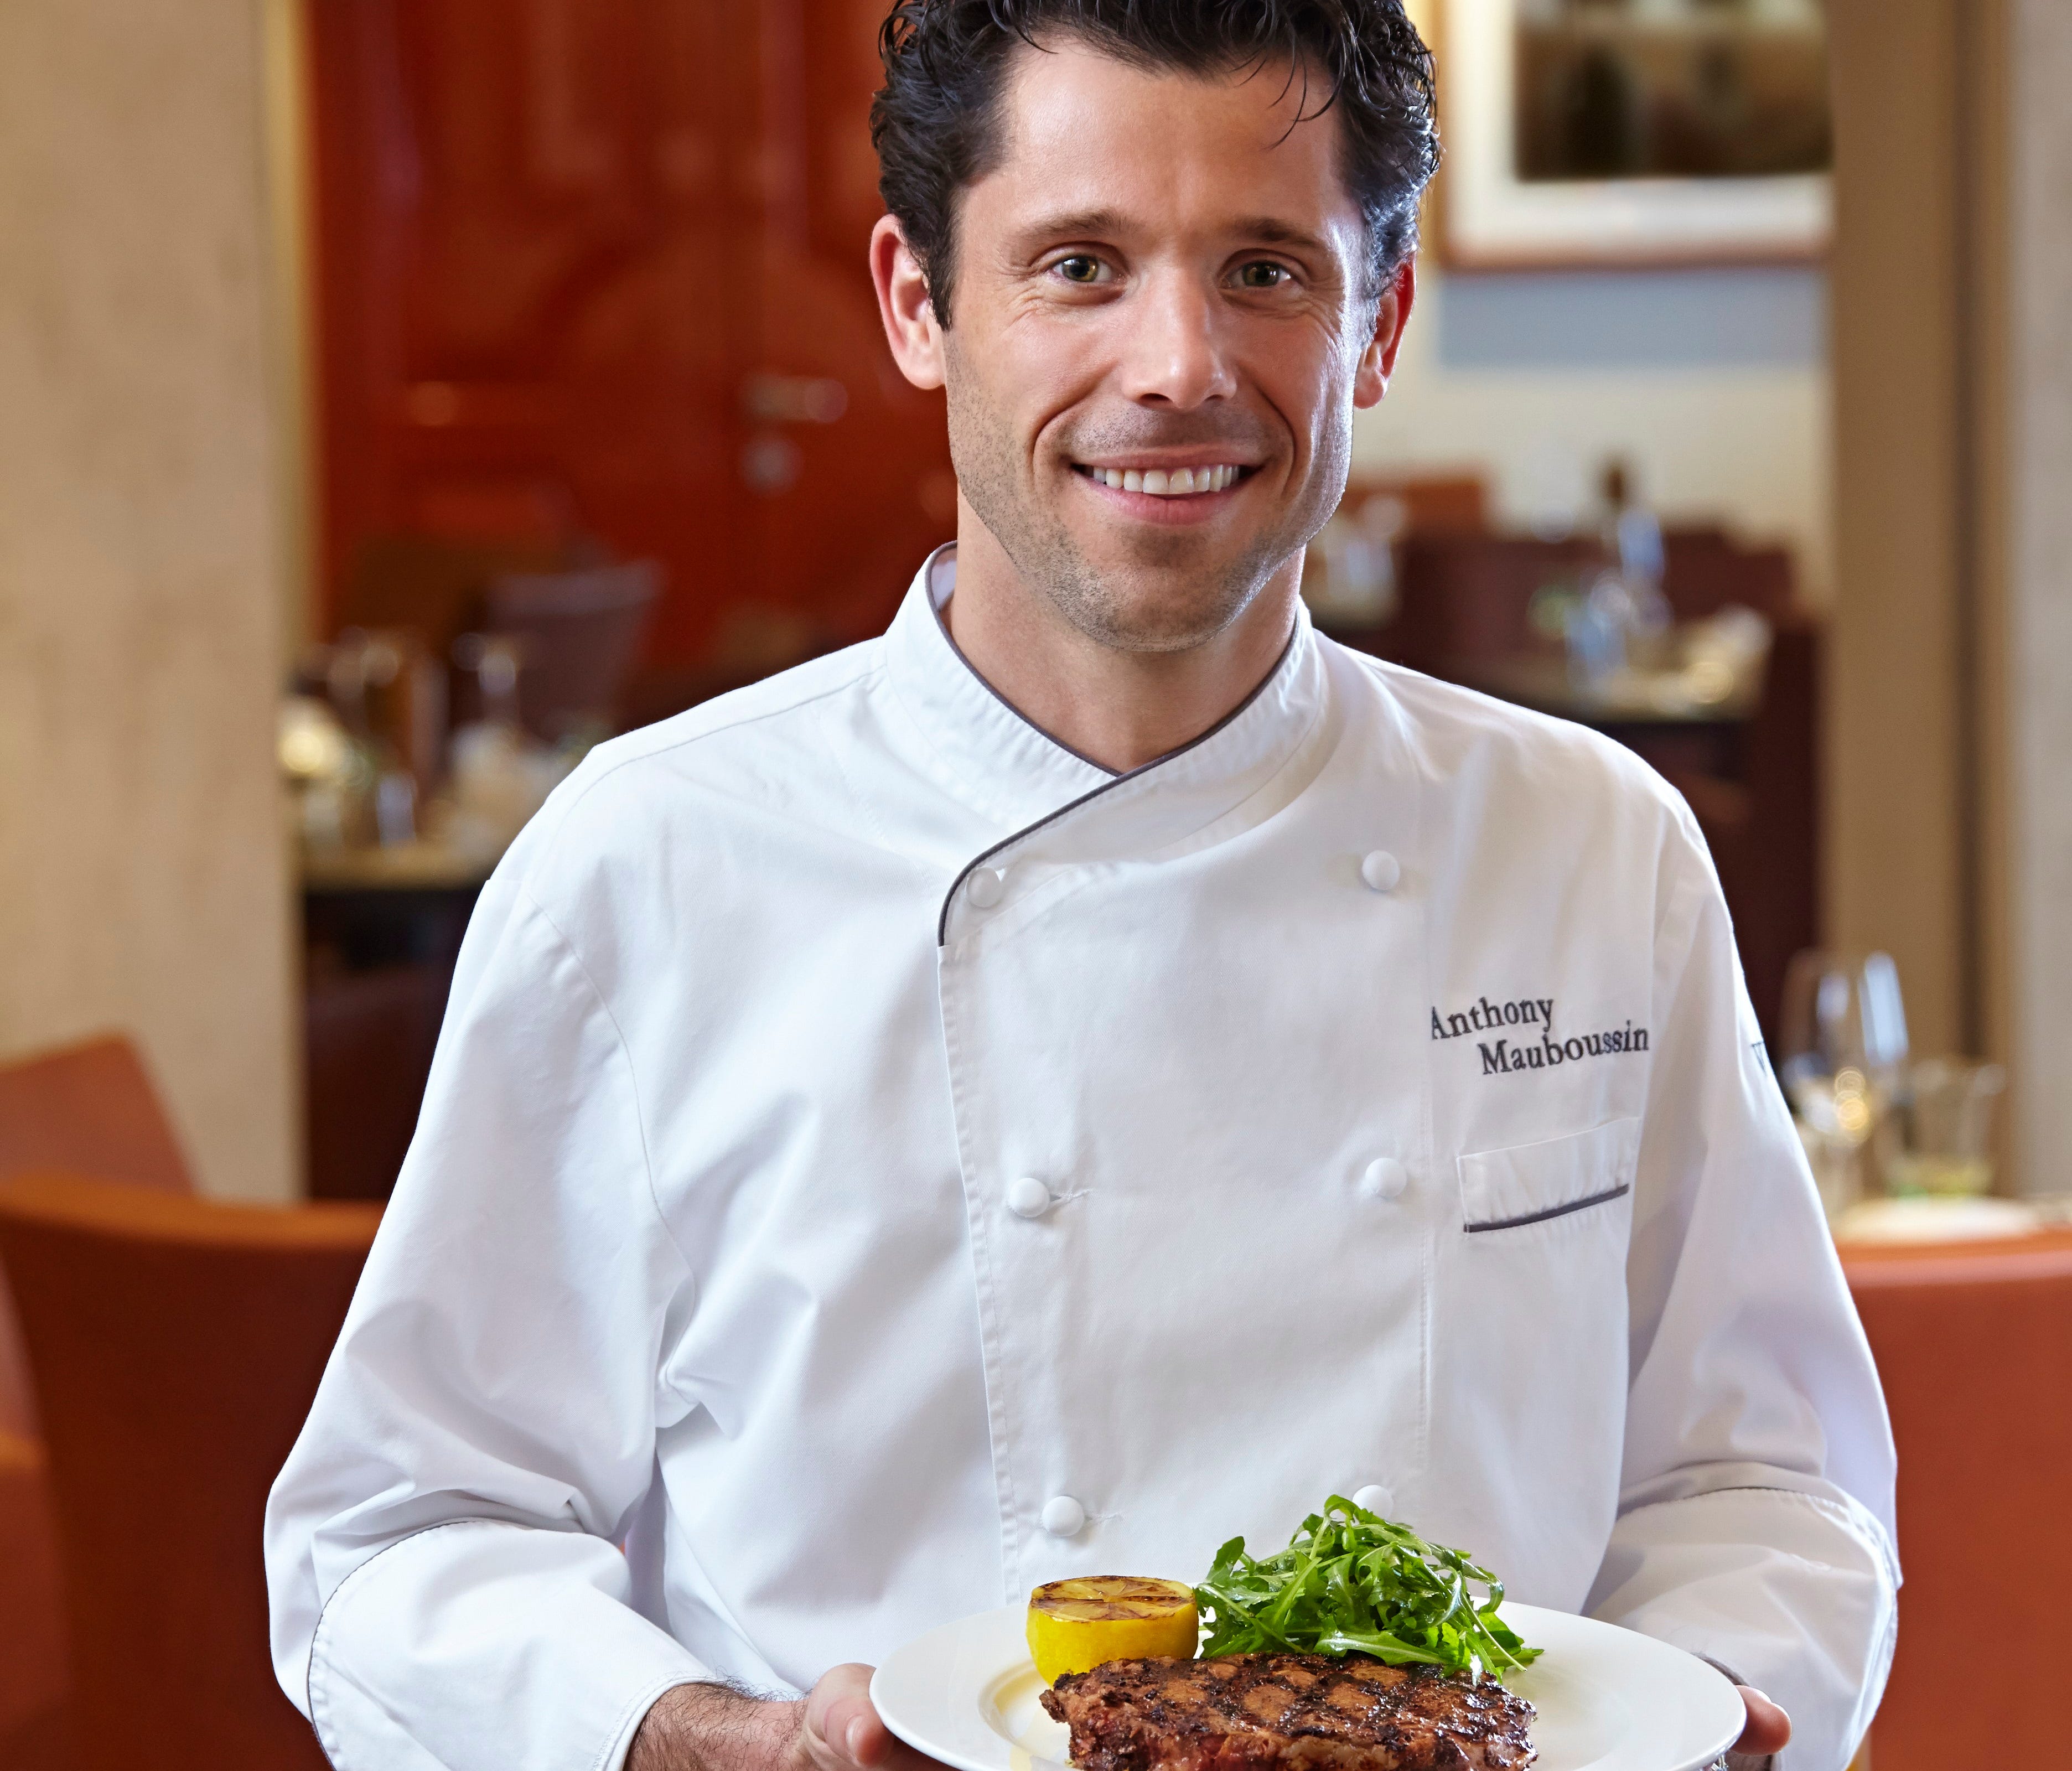 Viking Cruises director of culinary development Anthony Mauboussin.